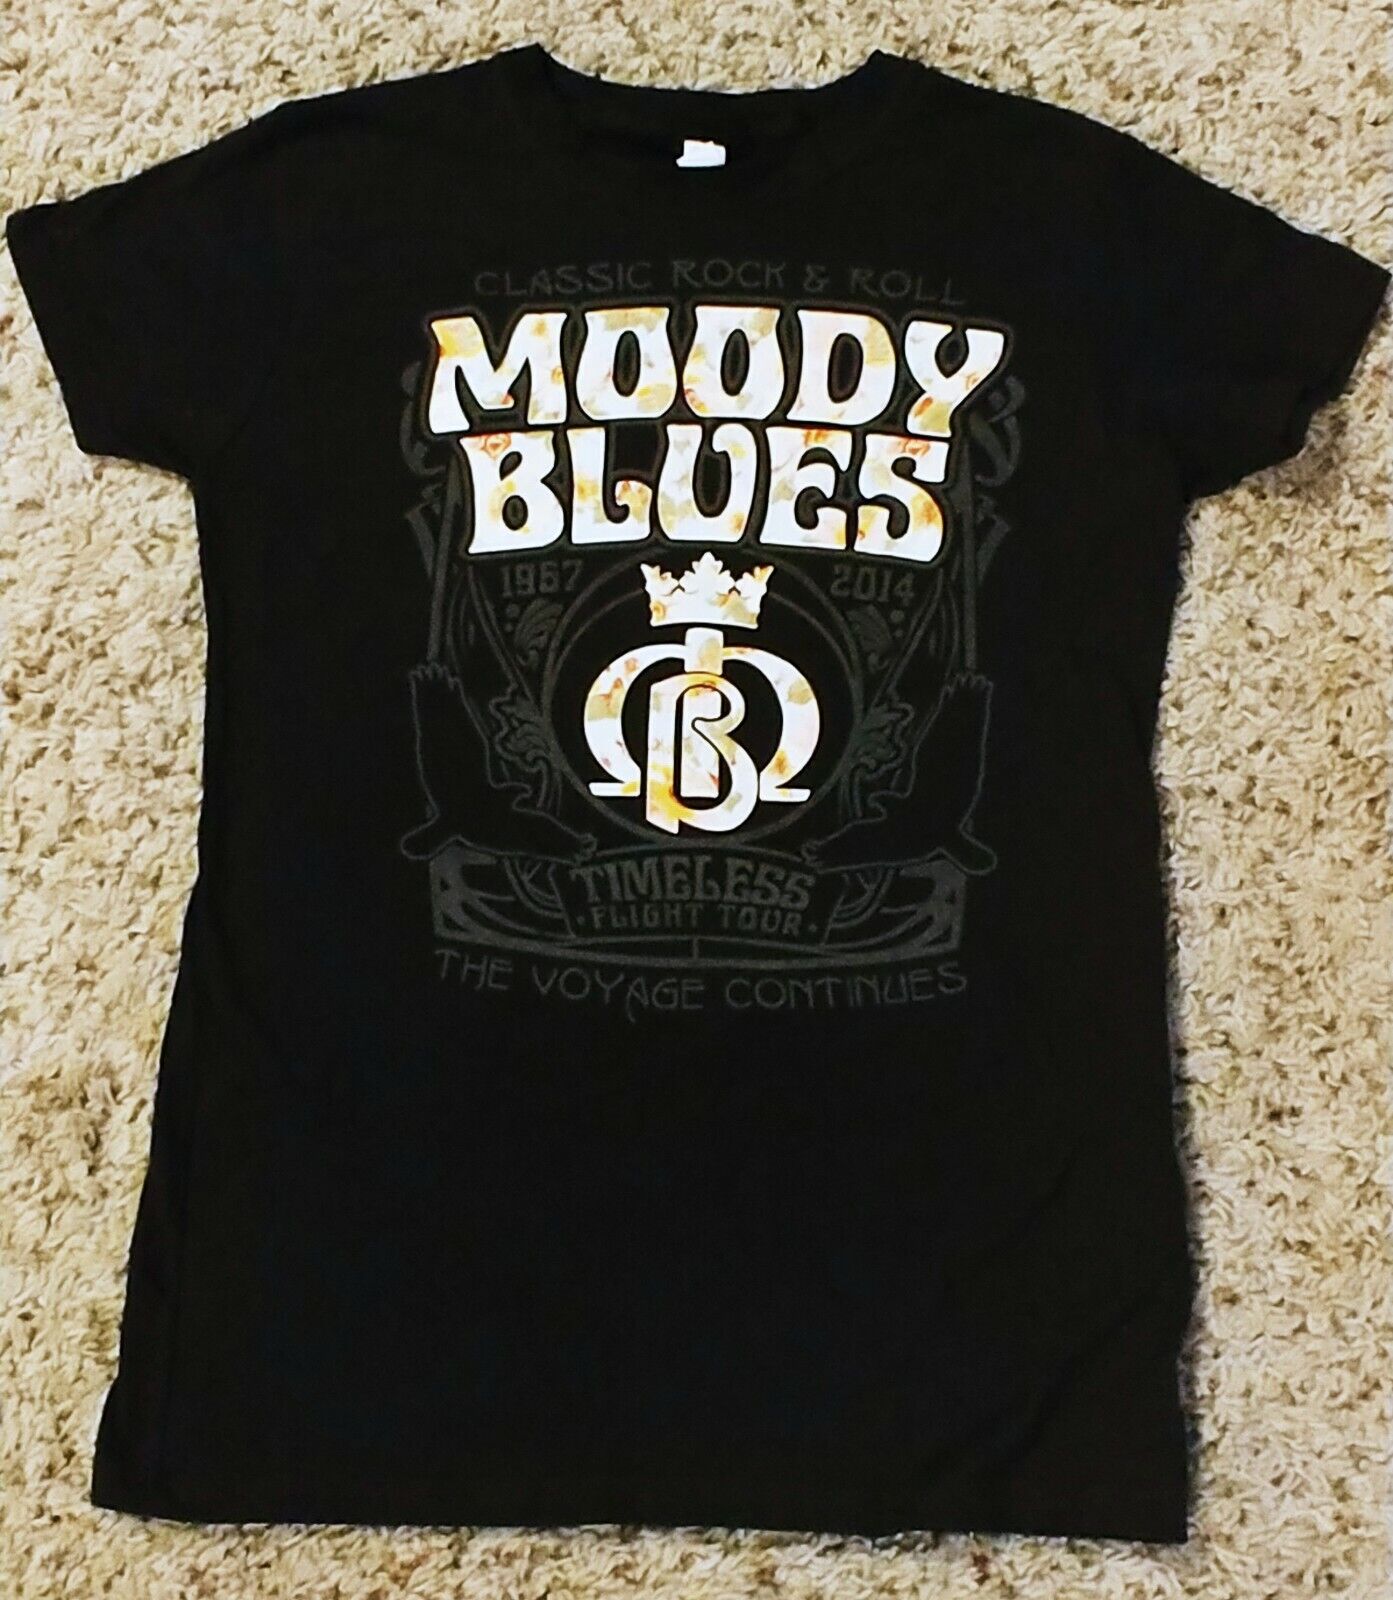 ☆ Moody Blues T-shirt, Timeless Flight Tour, Women's Large. Mint Condition! ☆